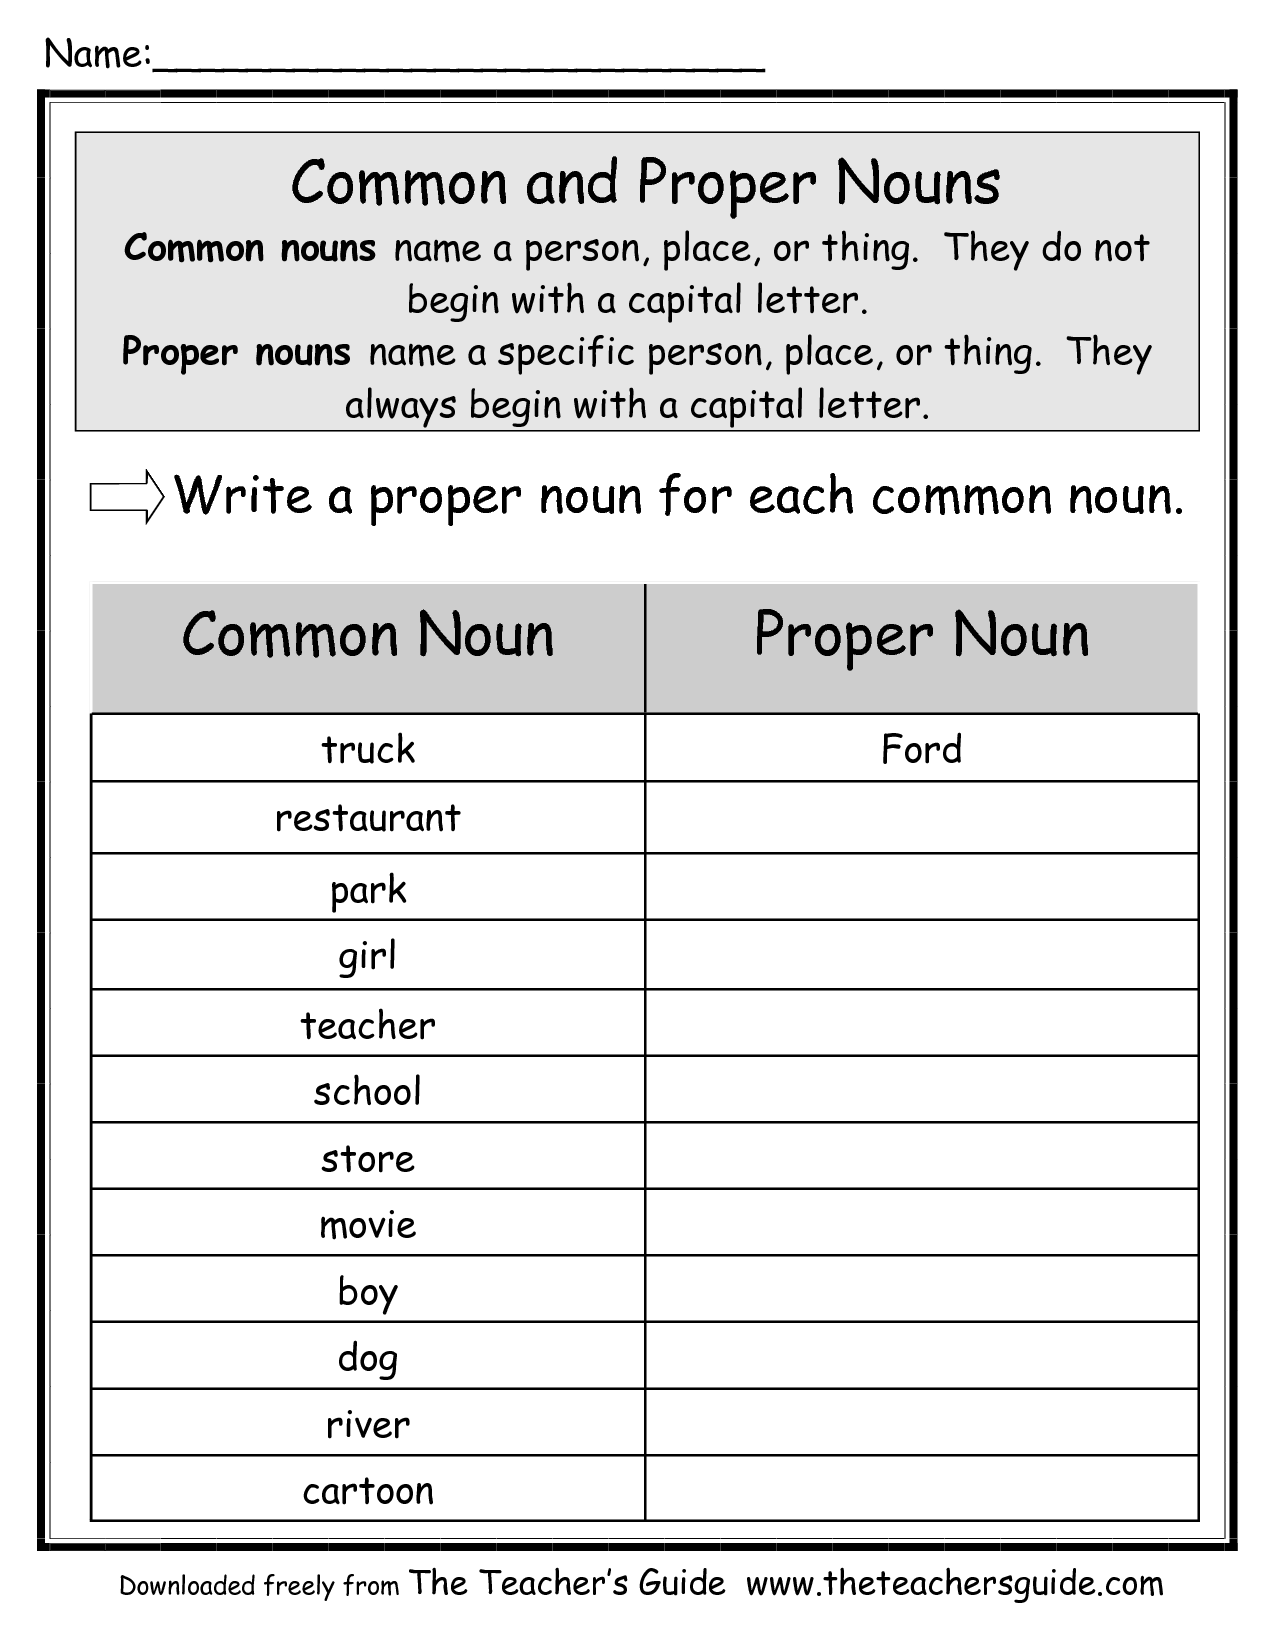 homework what noun